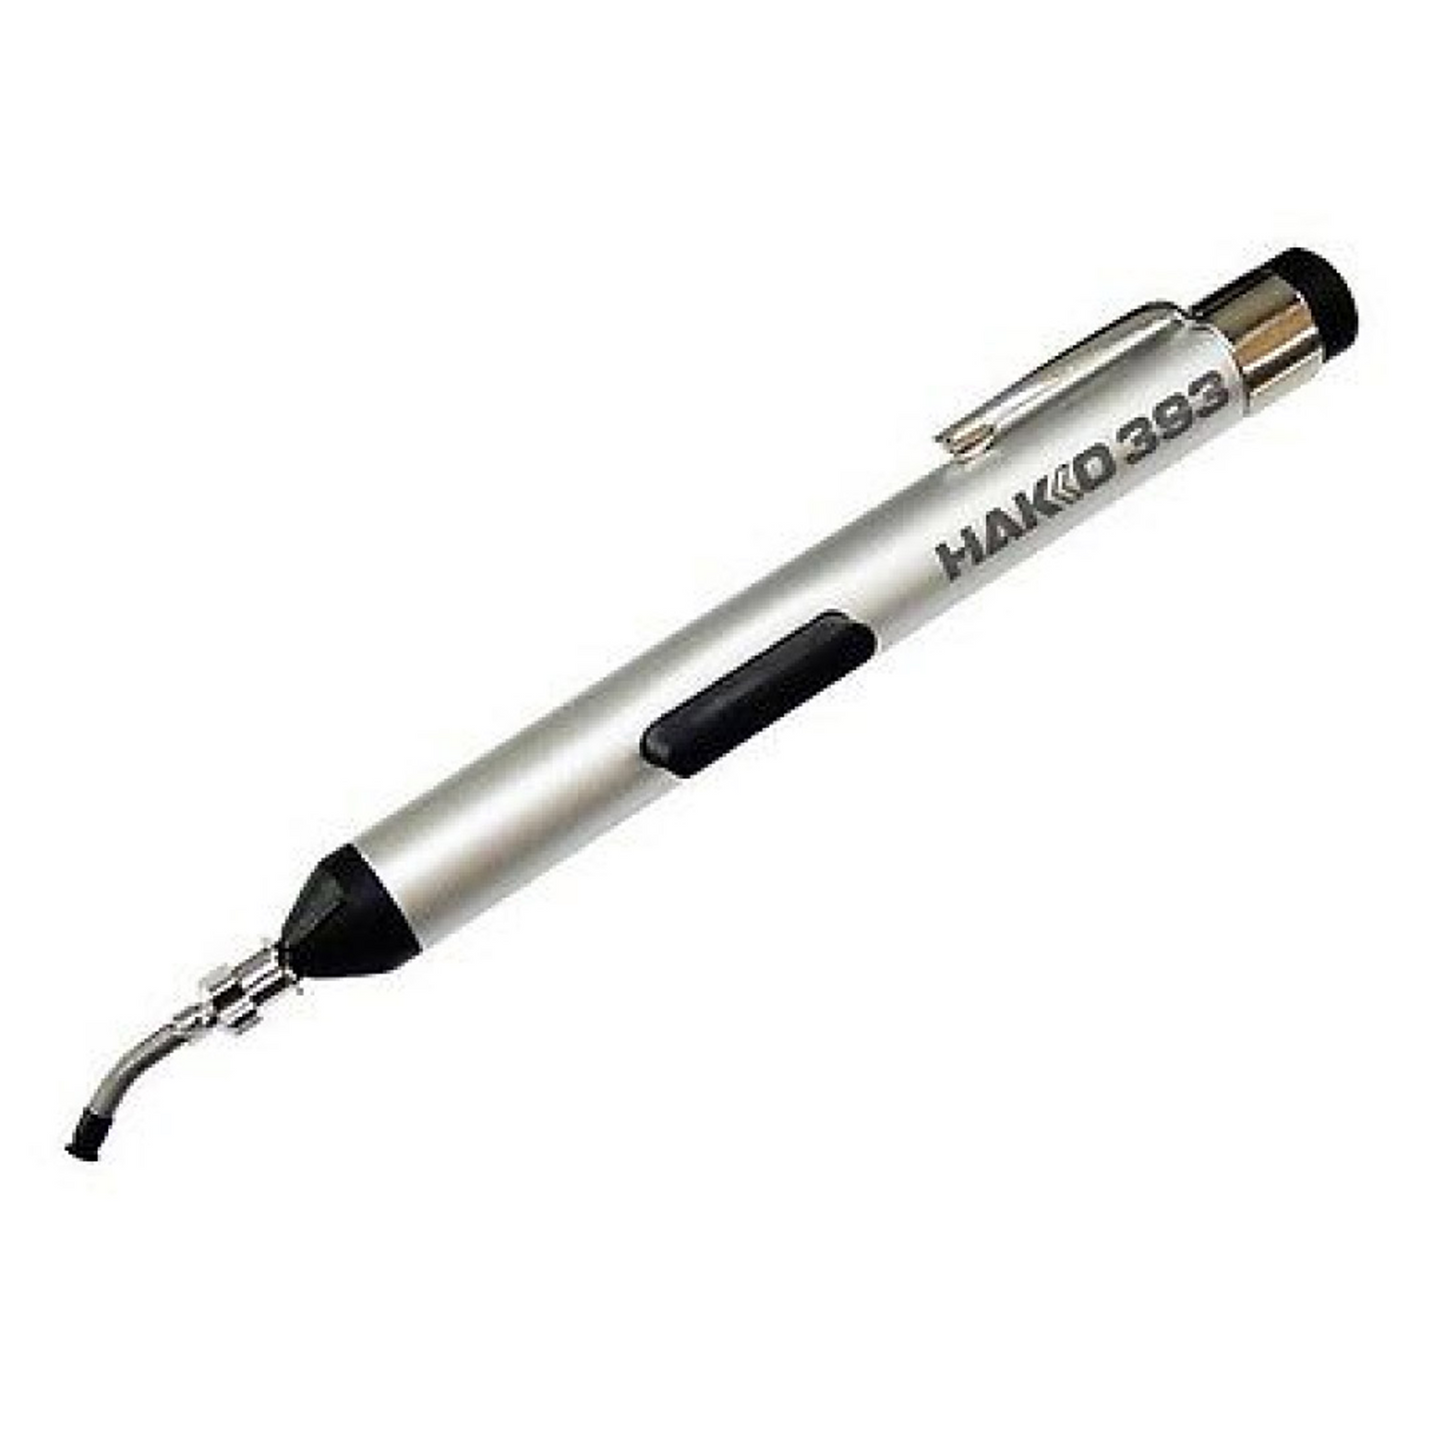 Hakko_ 393-1 Pen-vacuum Pick Up_ Soldering Related Equipment and Materials_ Hakko Products